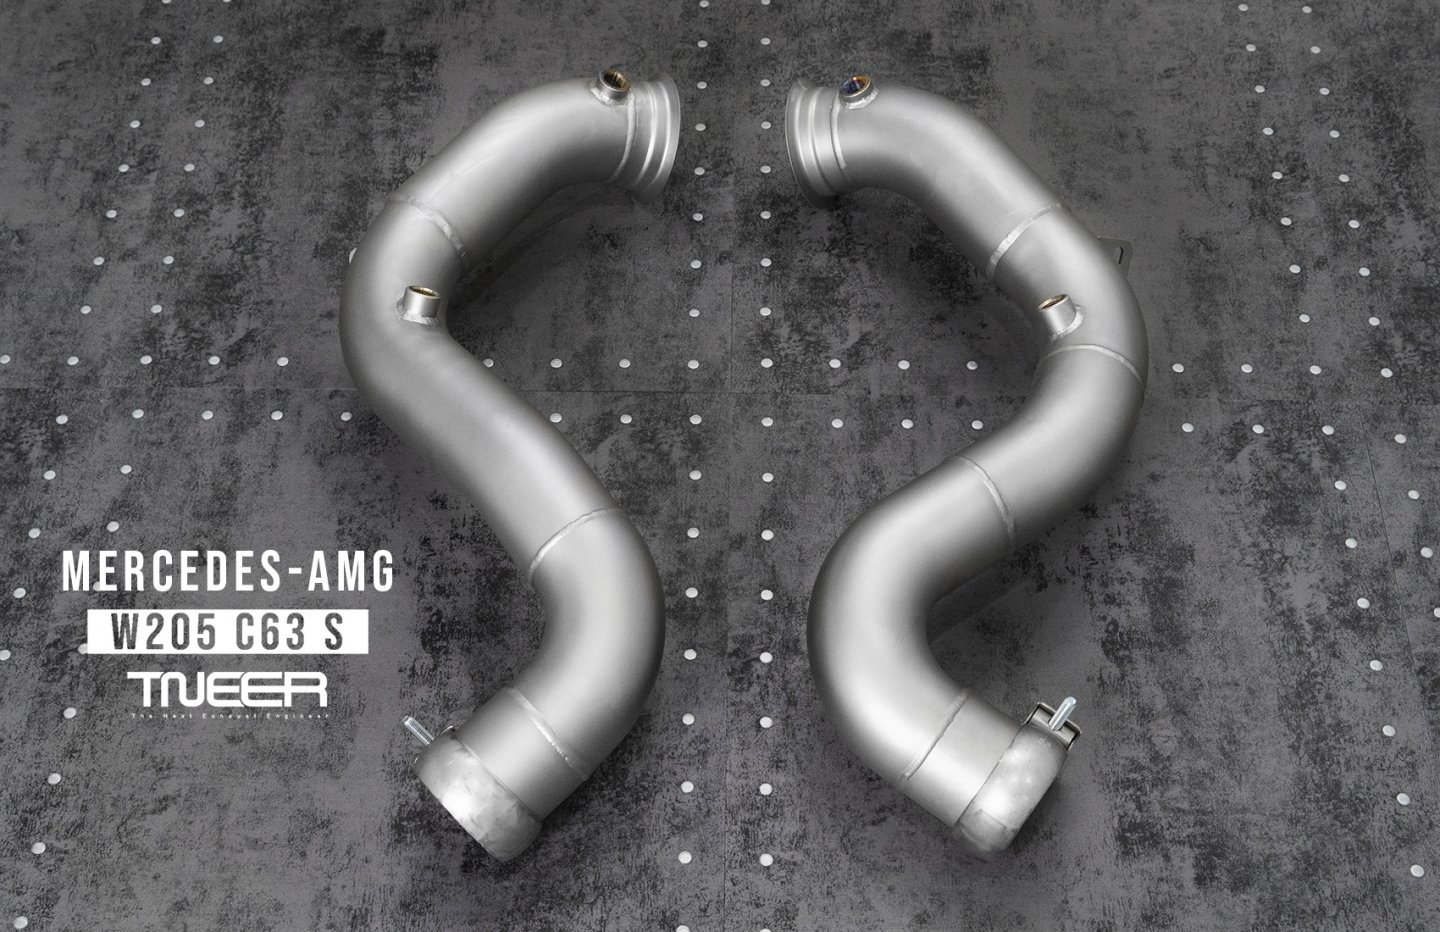 Carbon Fibre Steering Wheel – Mercedes C63s AMG